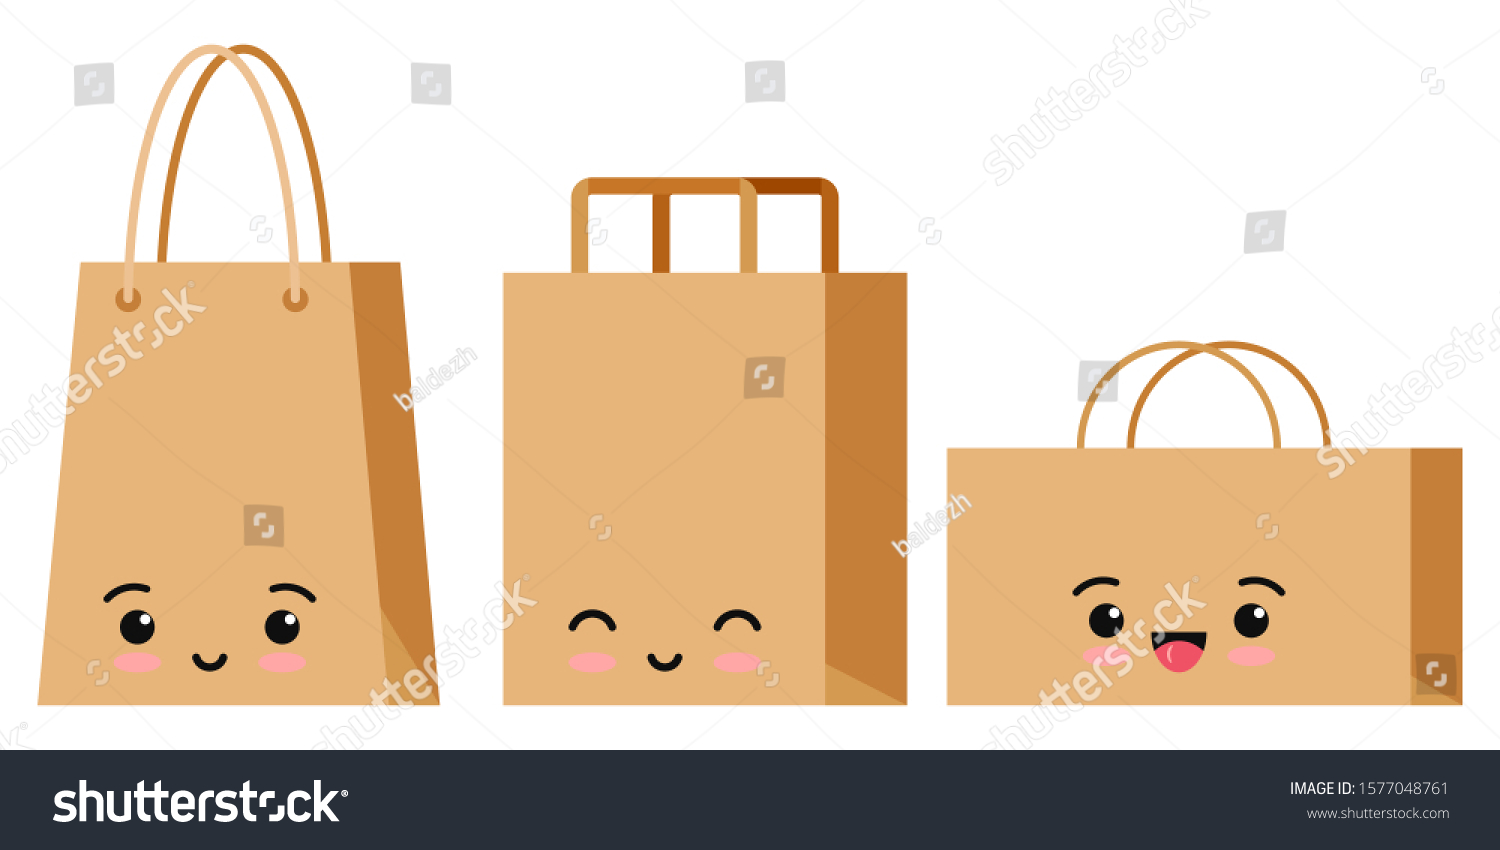 SVG of Emoji character packaging for goods set isolated on white background. Kawaii kraft brown cardboard supermarket, shop, restaurant, fast food package emoticon. Vector flat design pack icon illustration. svg